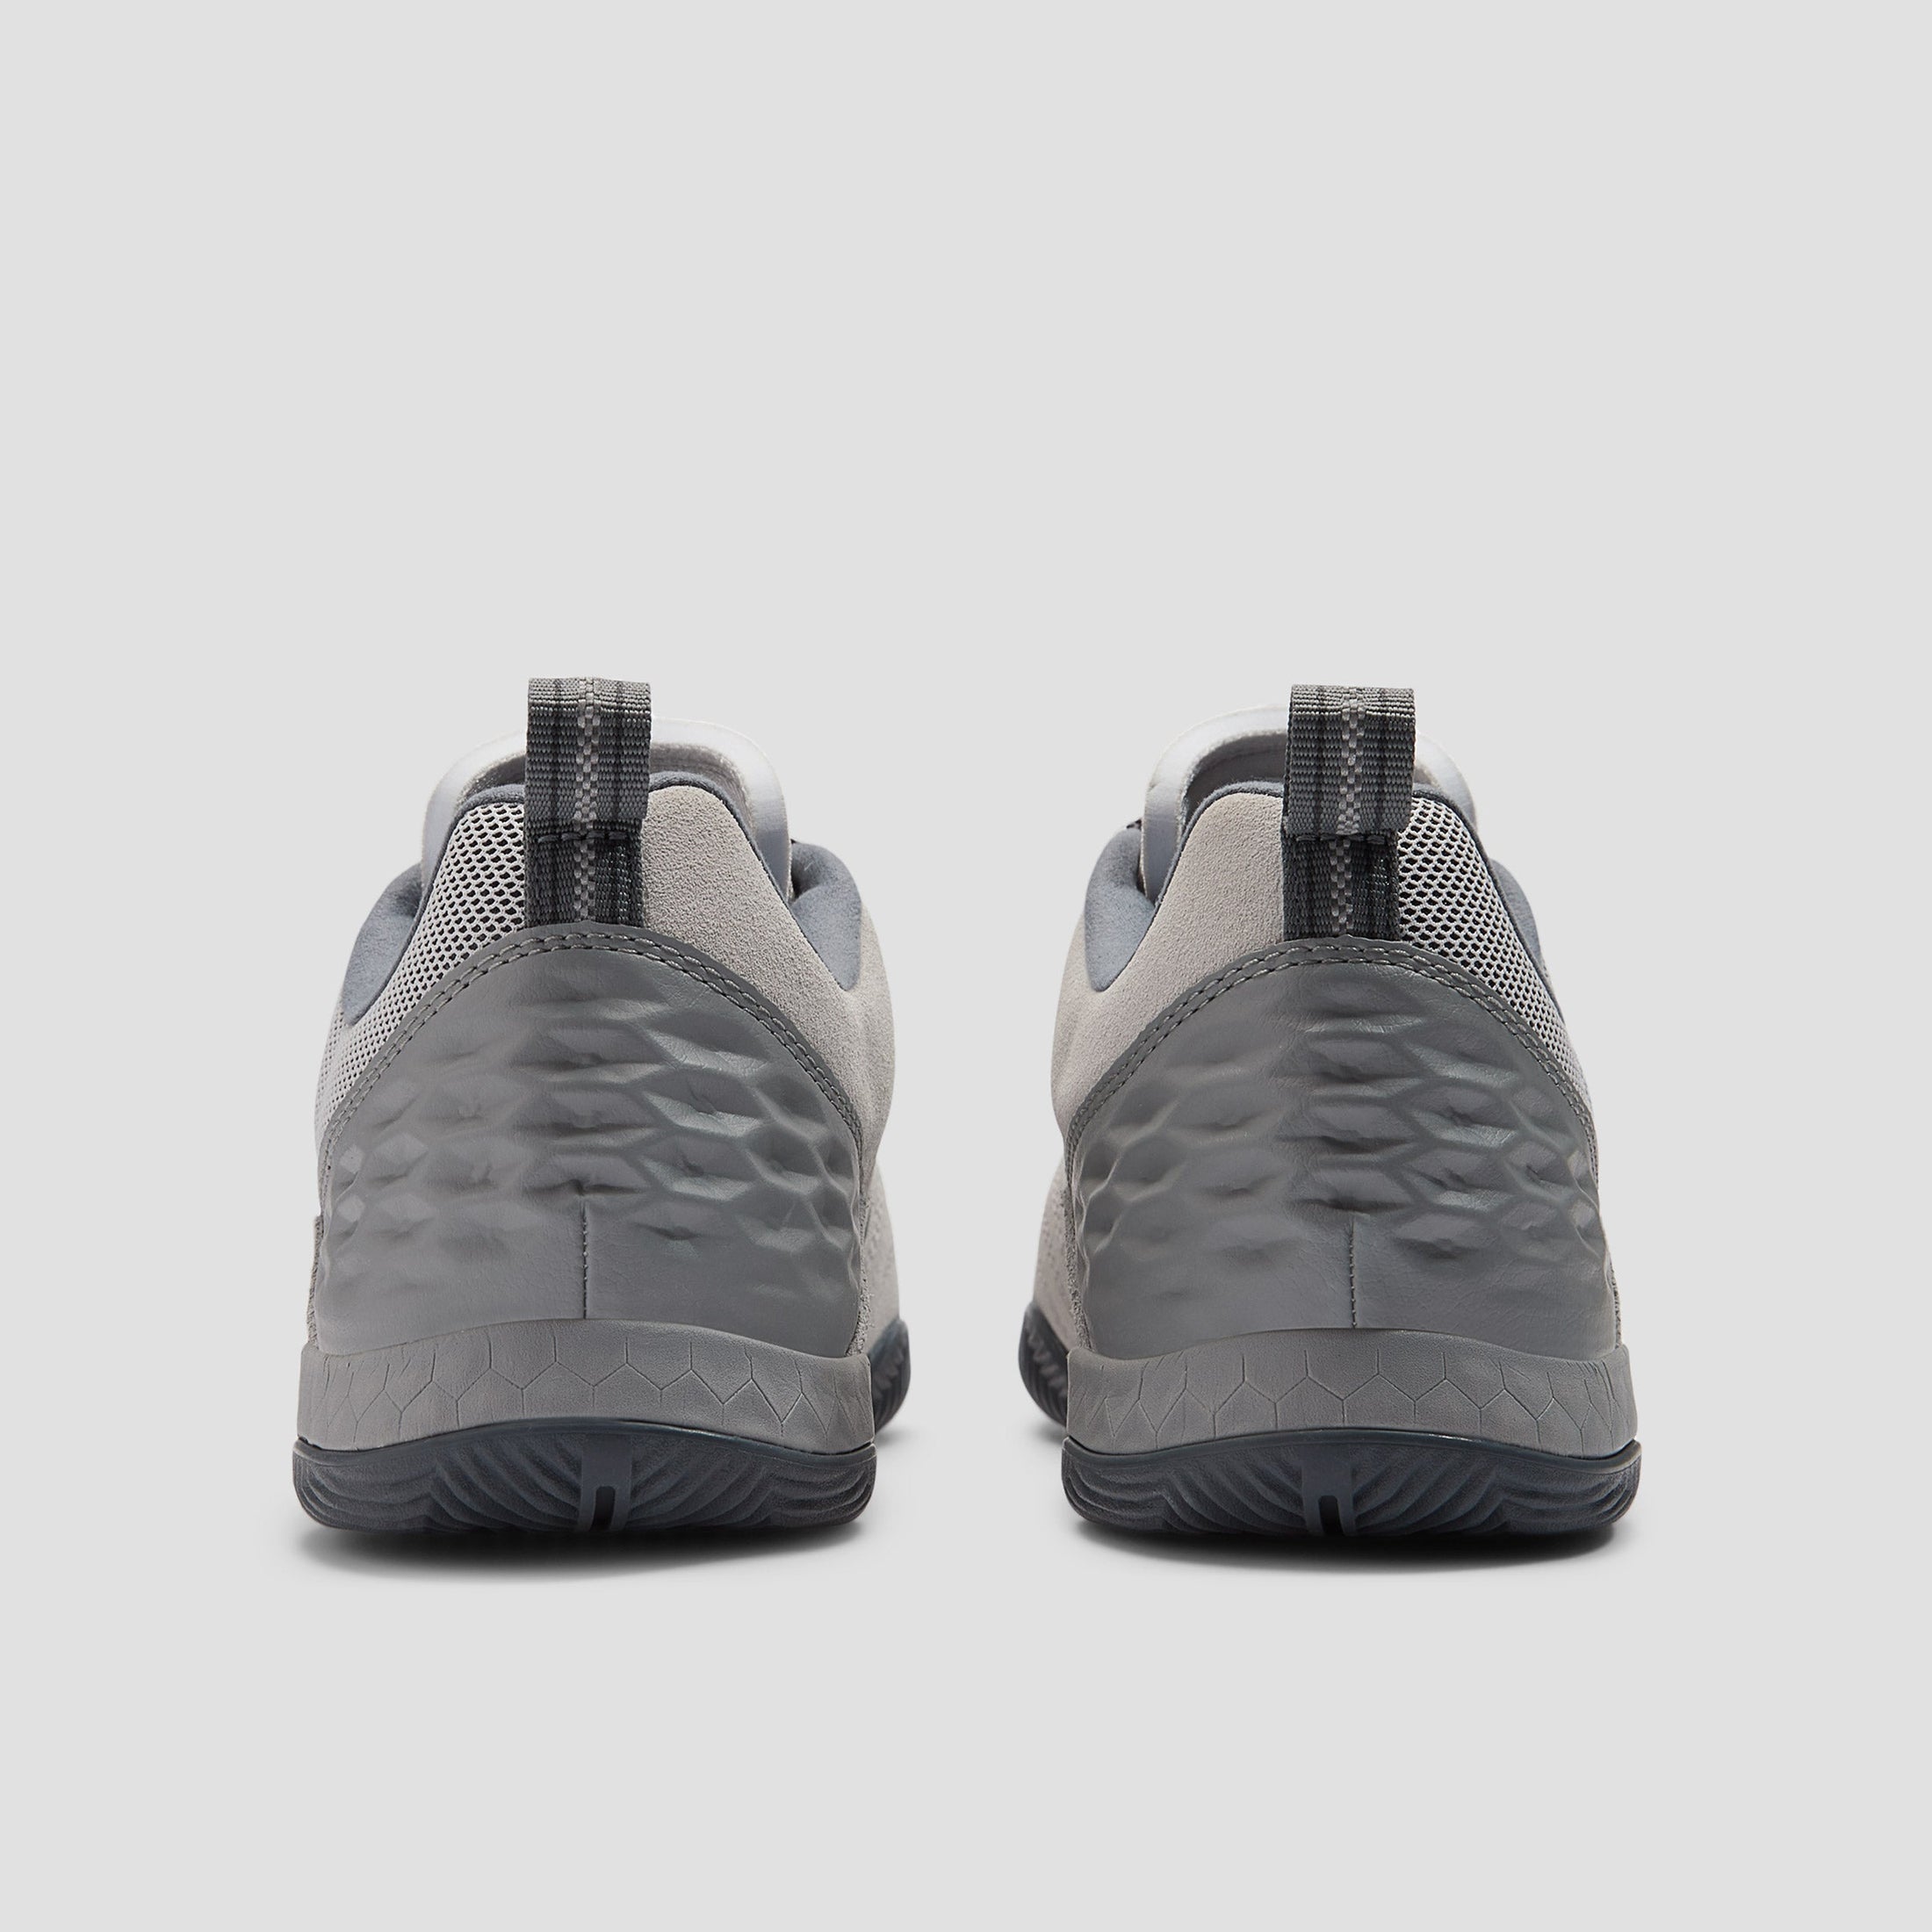 New Balance Audazo Skate Shoes Concrete / Grey Matter / Black